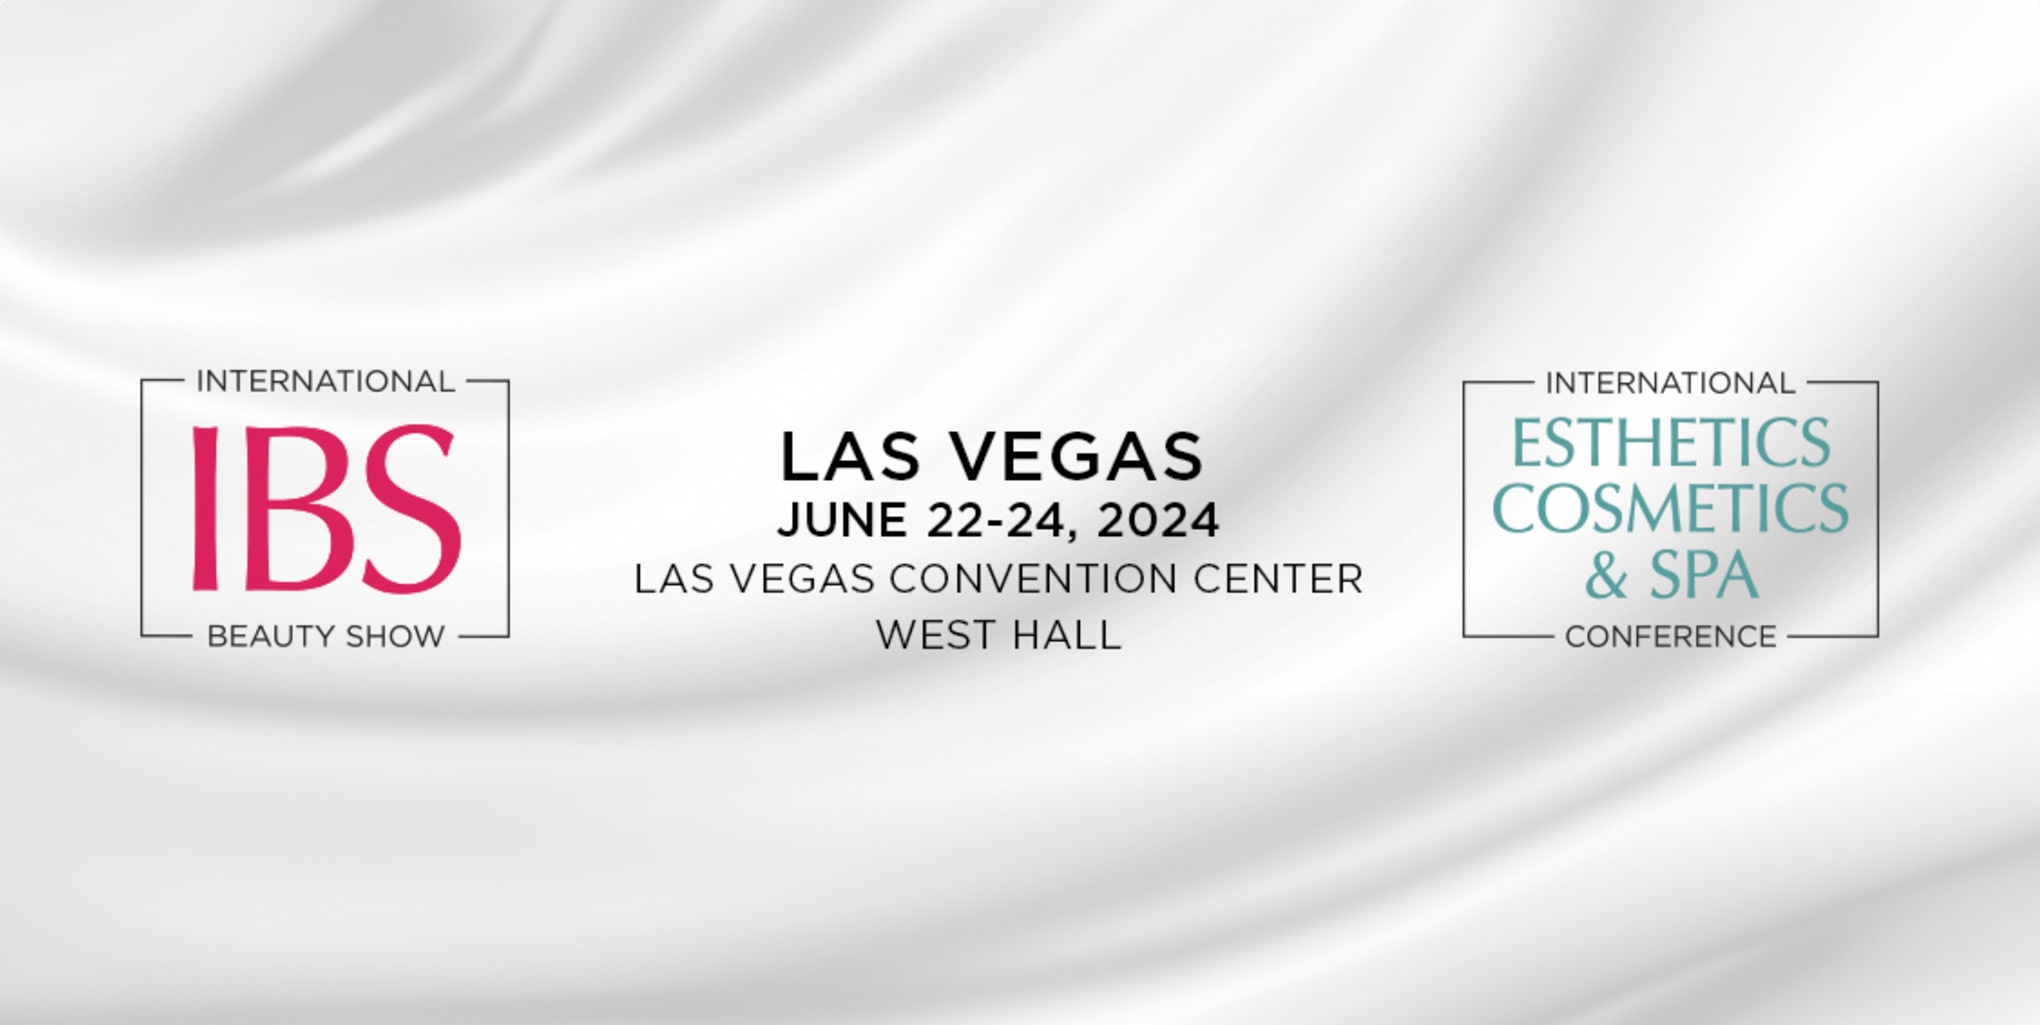 IECSC Las Vegas 2024 trade show featured image.